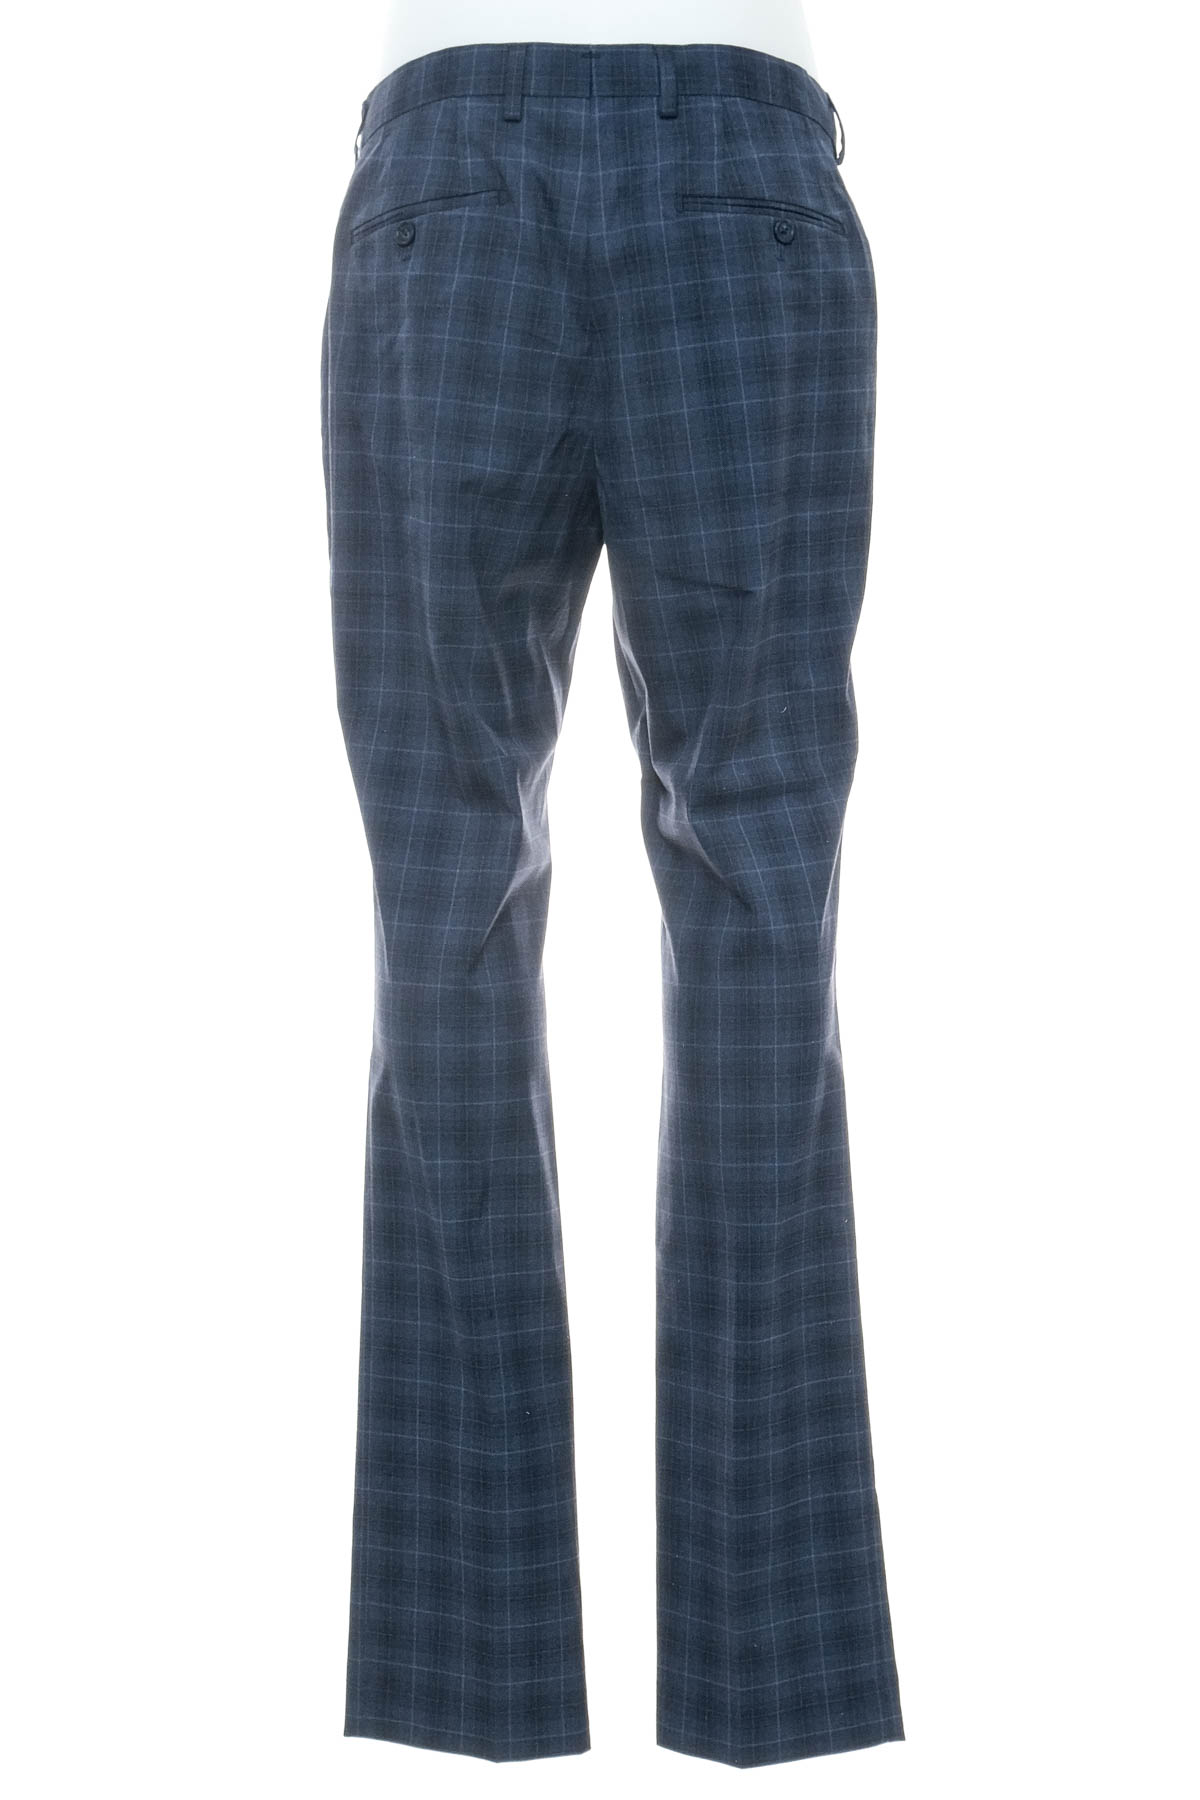 Pantalon pentru bărbați - Oxford - 1